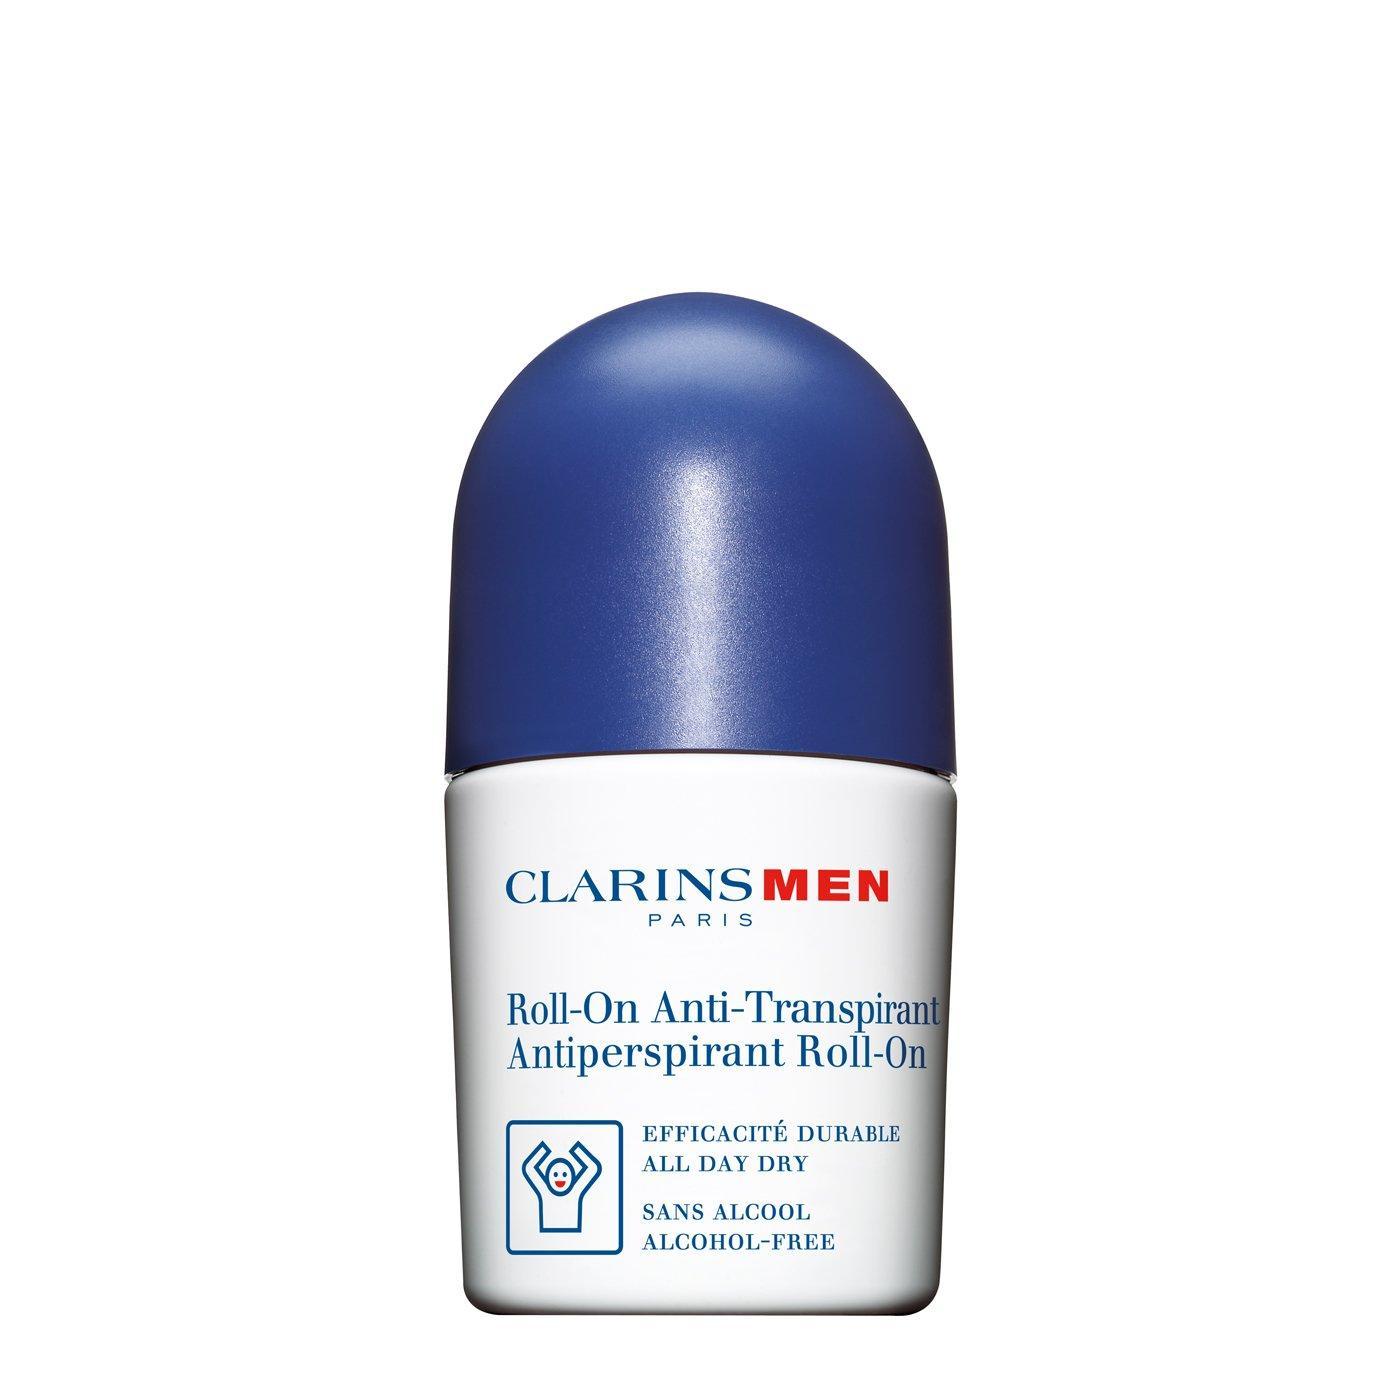 Clarins Men Roll-On Anti-Transpirant Дезодорант рол-он без опаковка